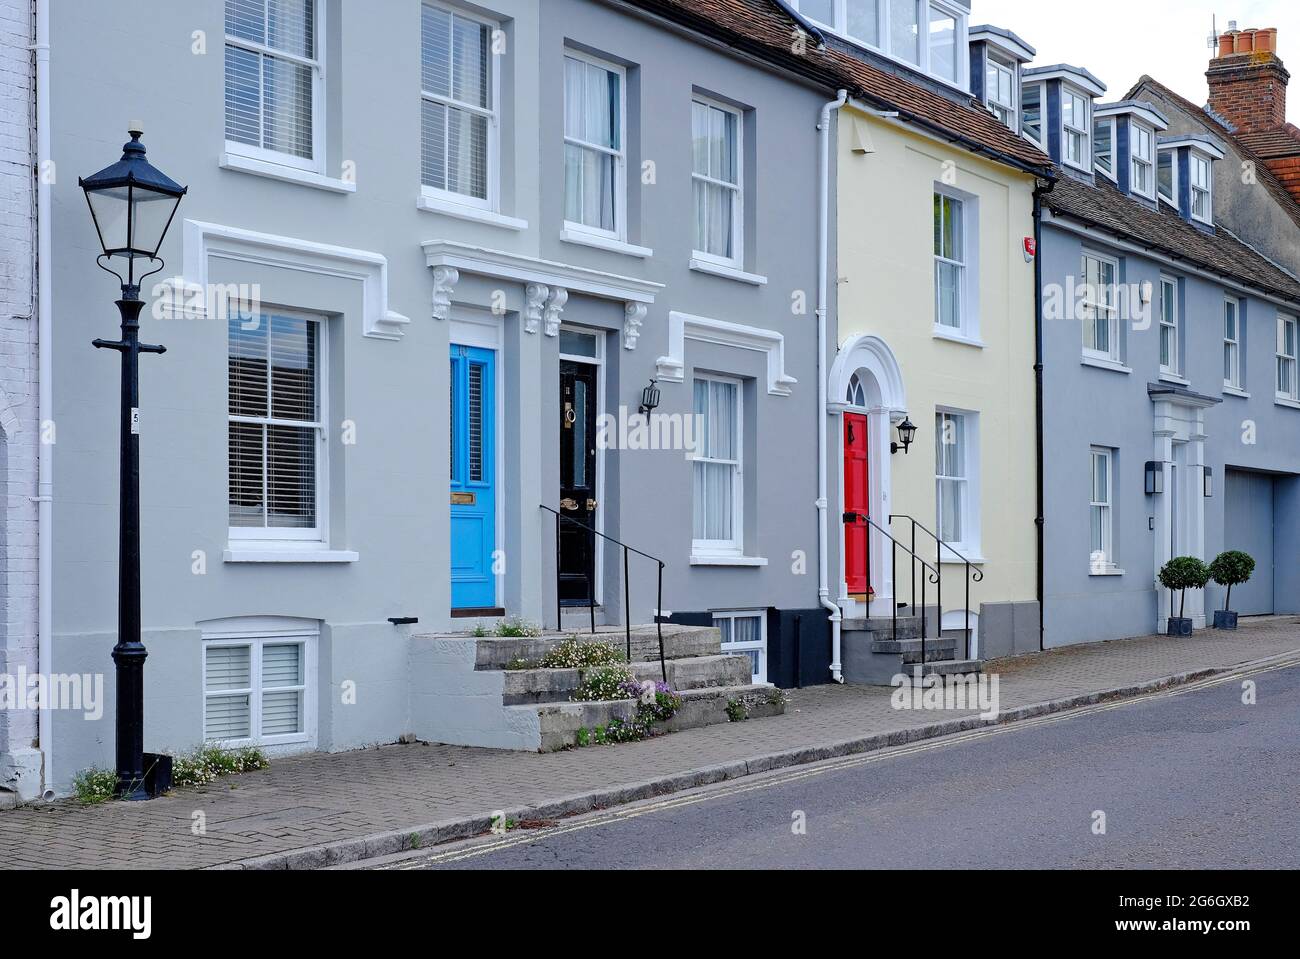 row of terraced houses in lymington, hampshire, england Stock Photo